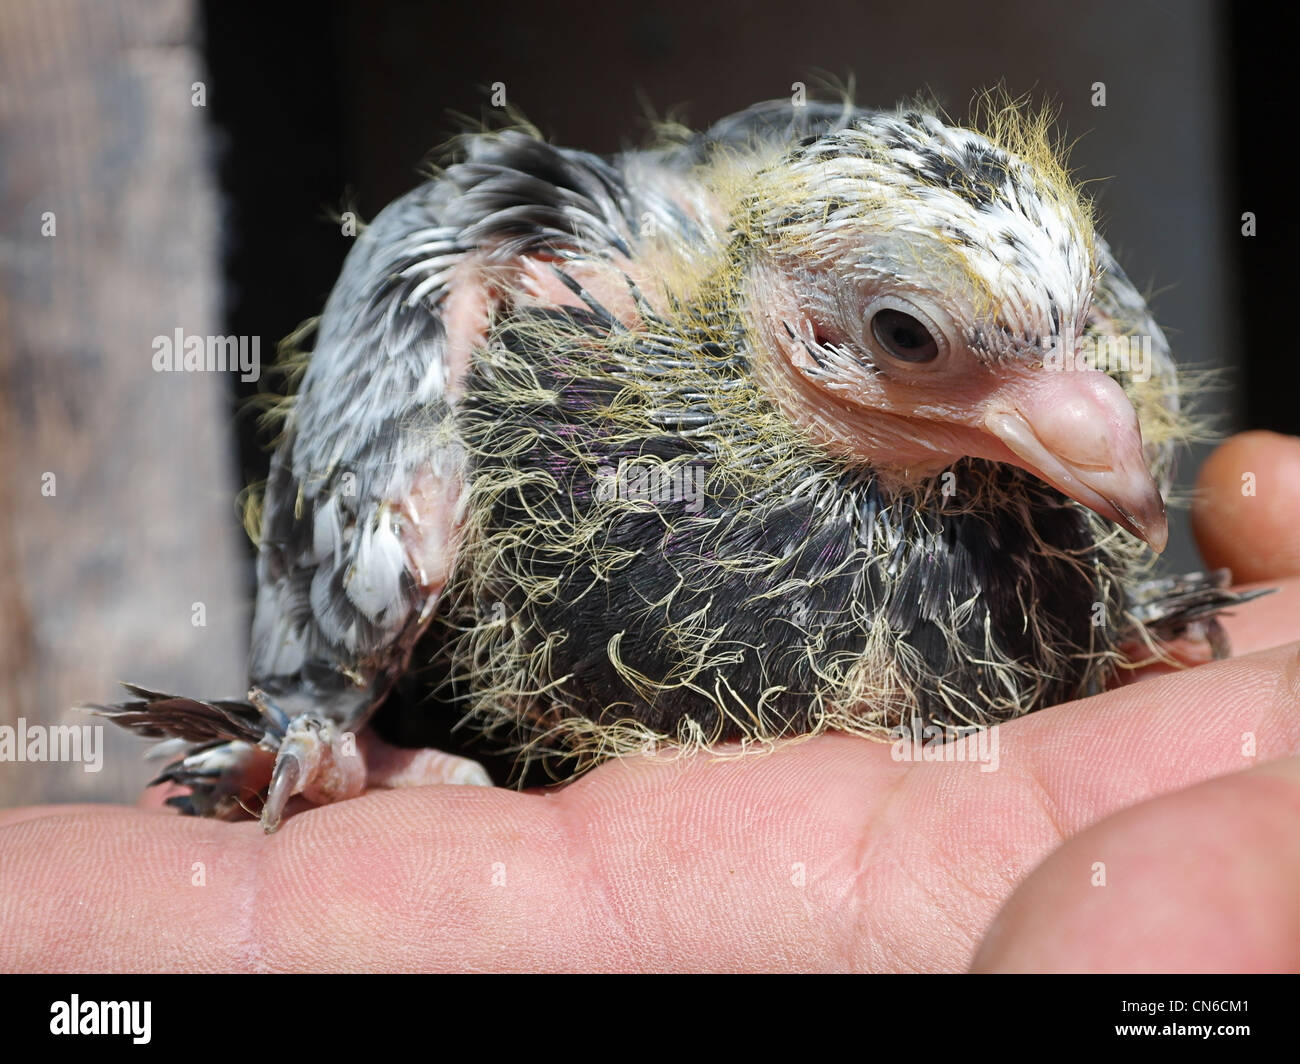 Pigeon nestling baby on hand Stock Photo